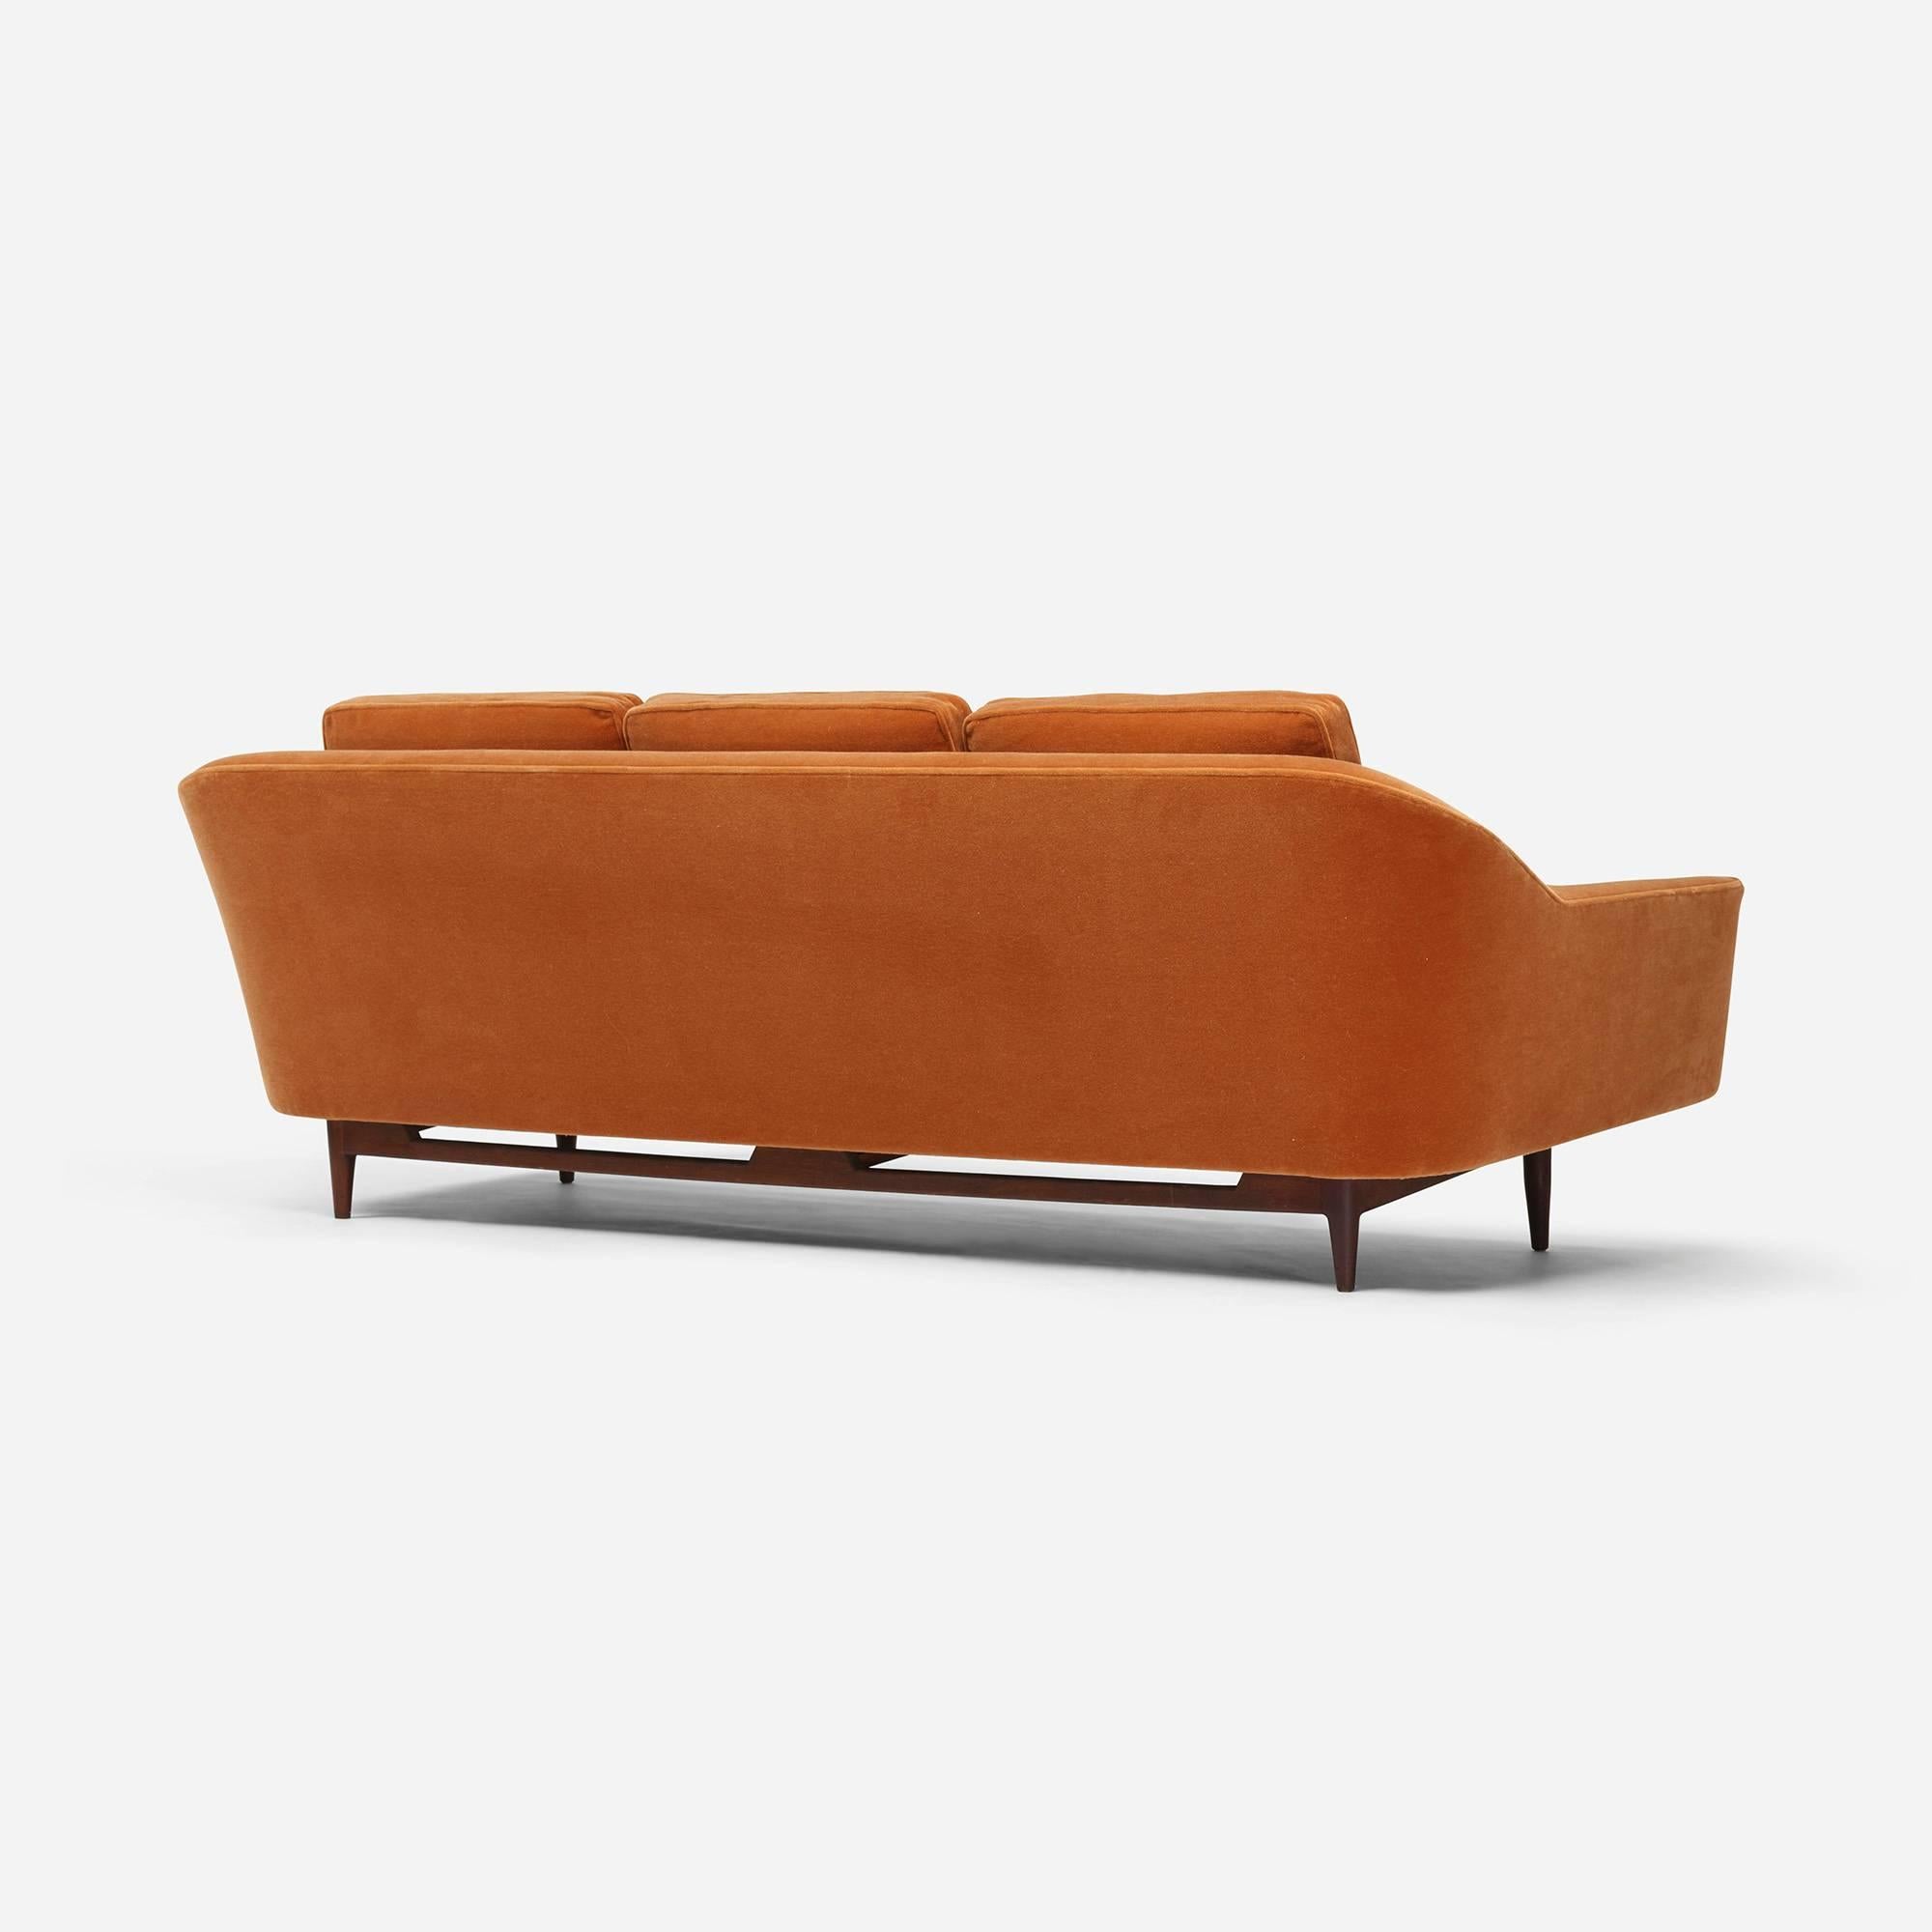 American Sofa, Model 2516 by Jens Risom for Jens Risom Design, Inc.